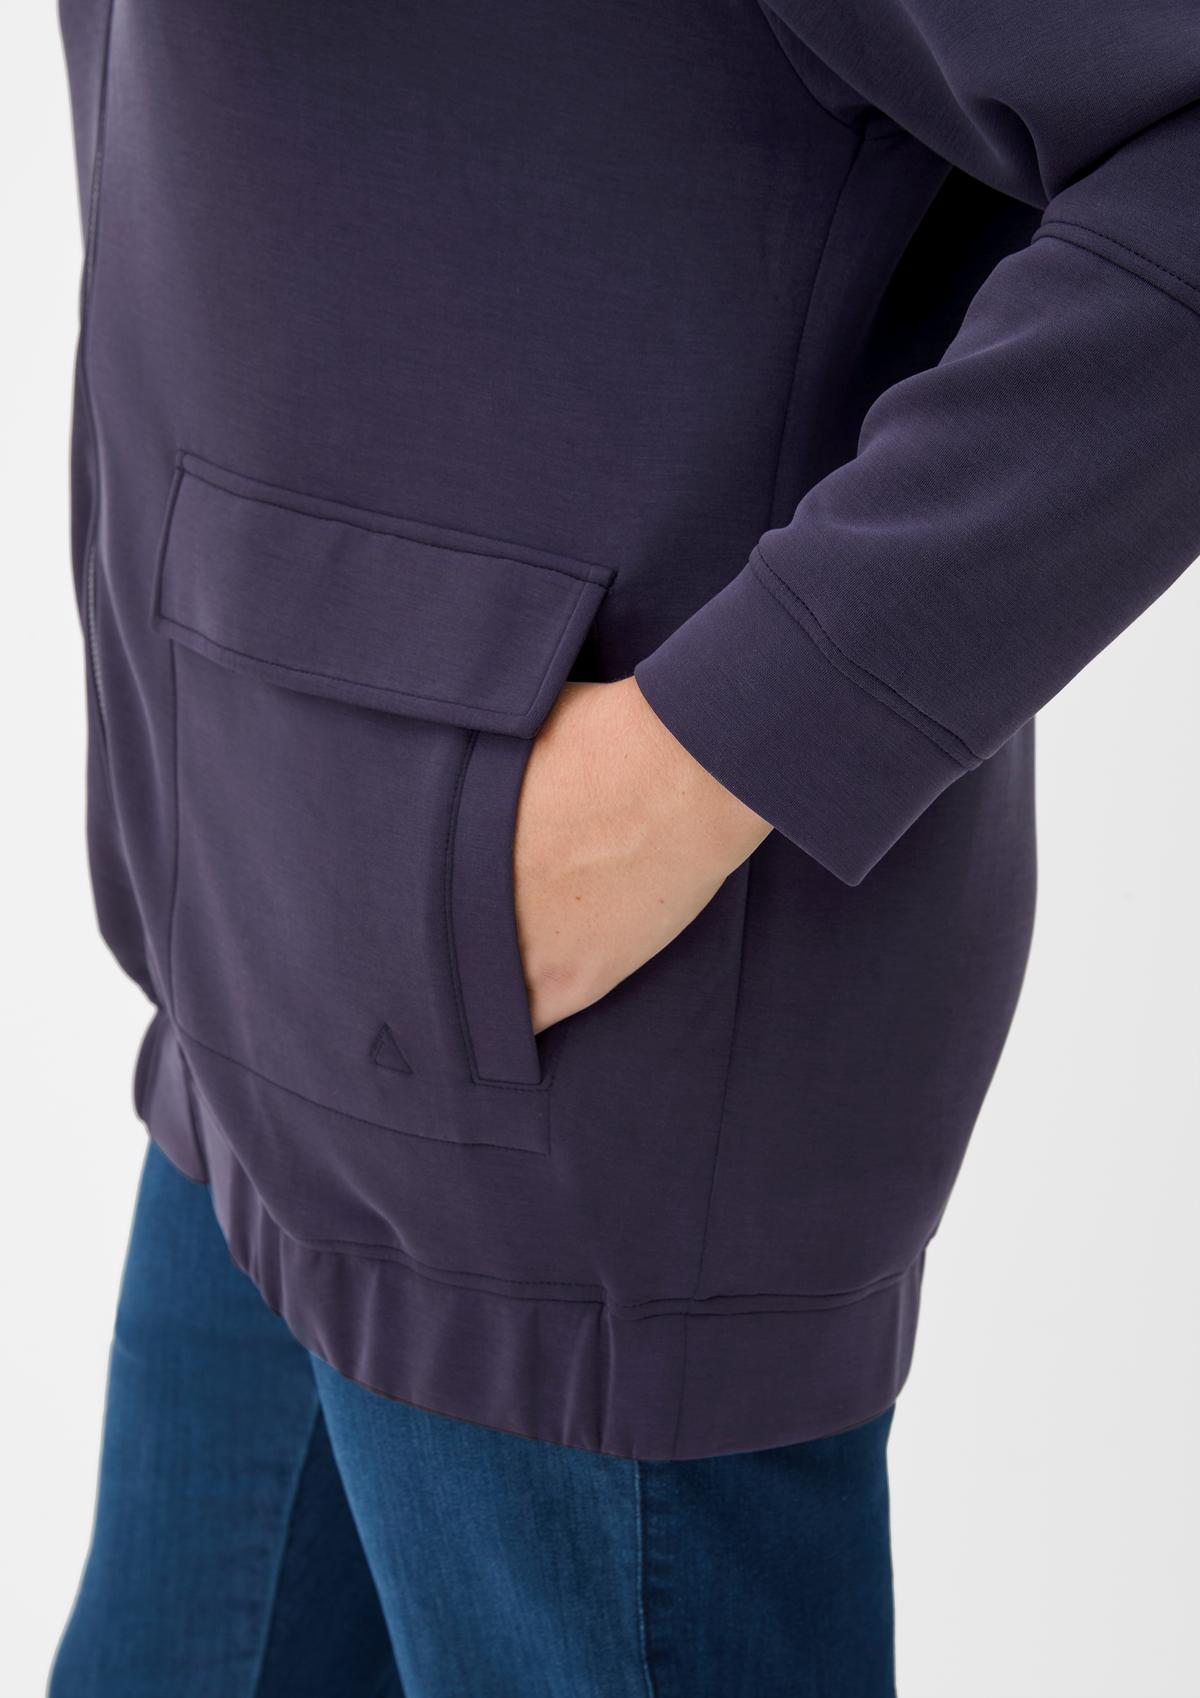 s.Oliver Sweatshirt jacket with flap pockets